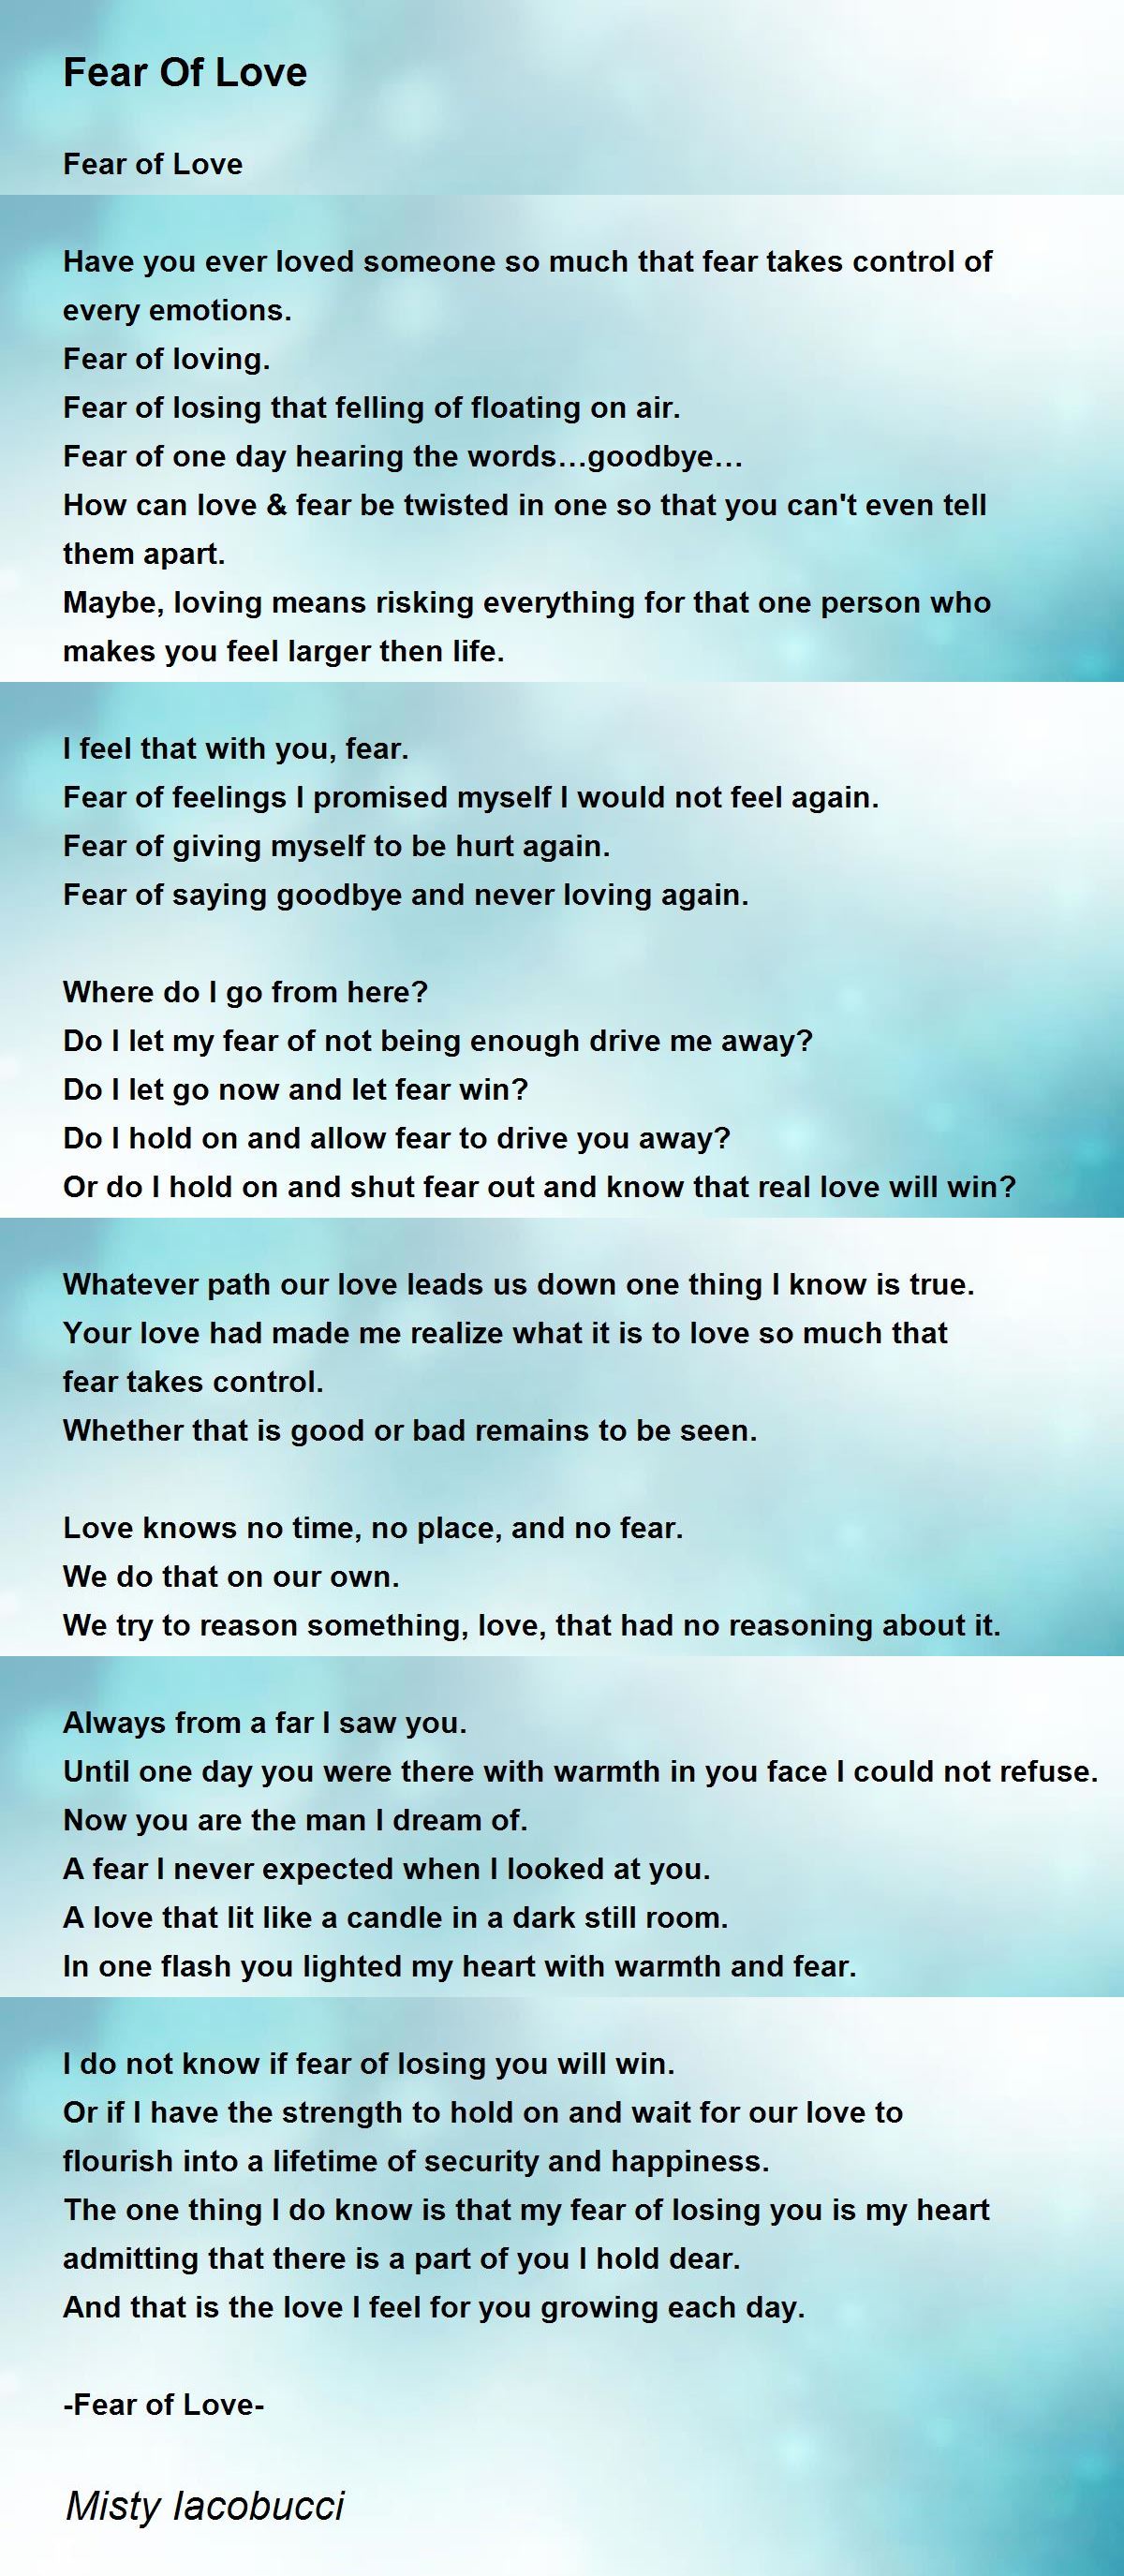 Fear Of Love - Fear Of Love Poem by Misty Iacobucci